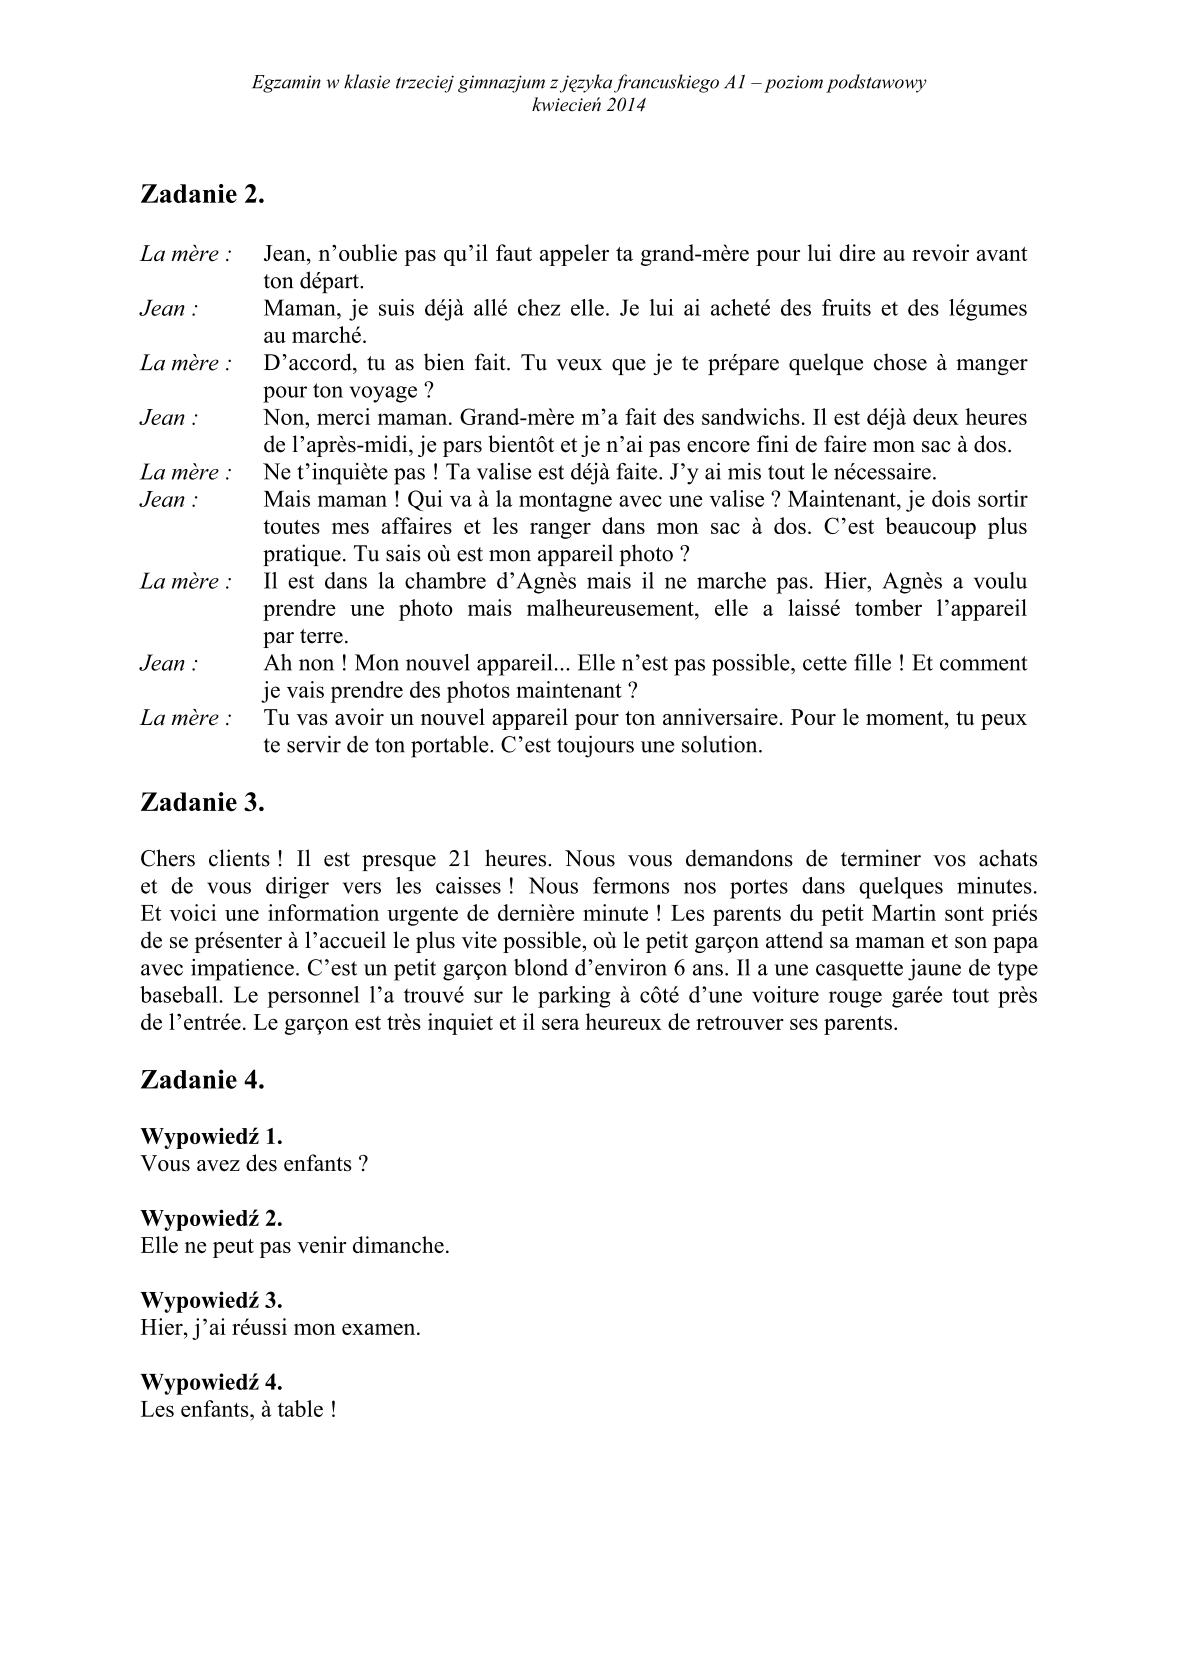 transkrypcja-francuski-poziom-podstawowy-egzamin-gimnazjalny-25.04.2014-2